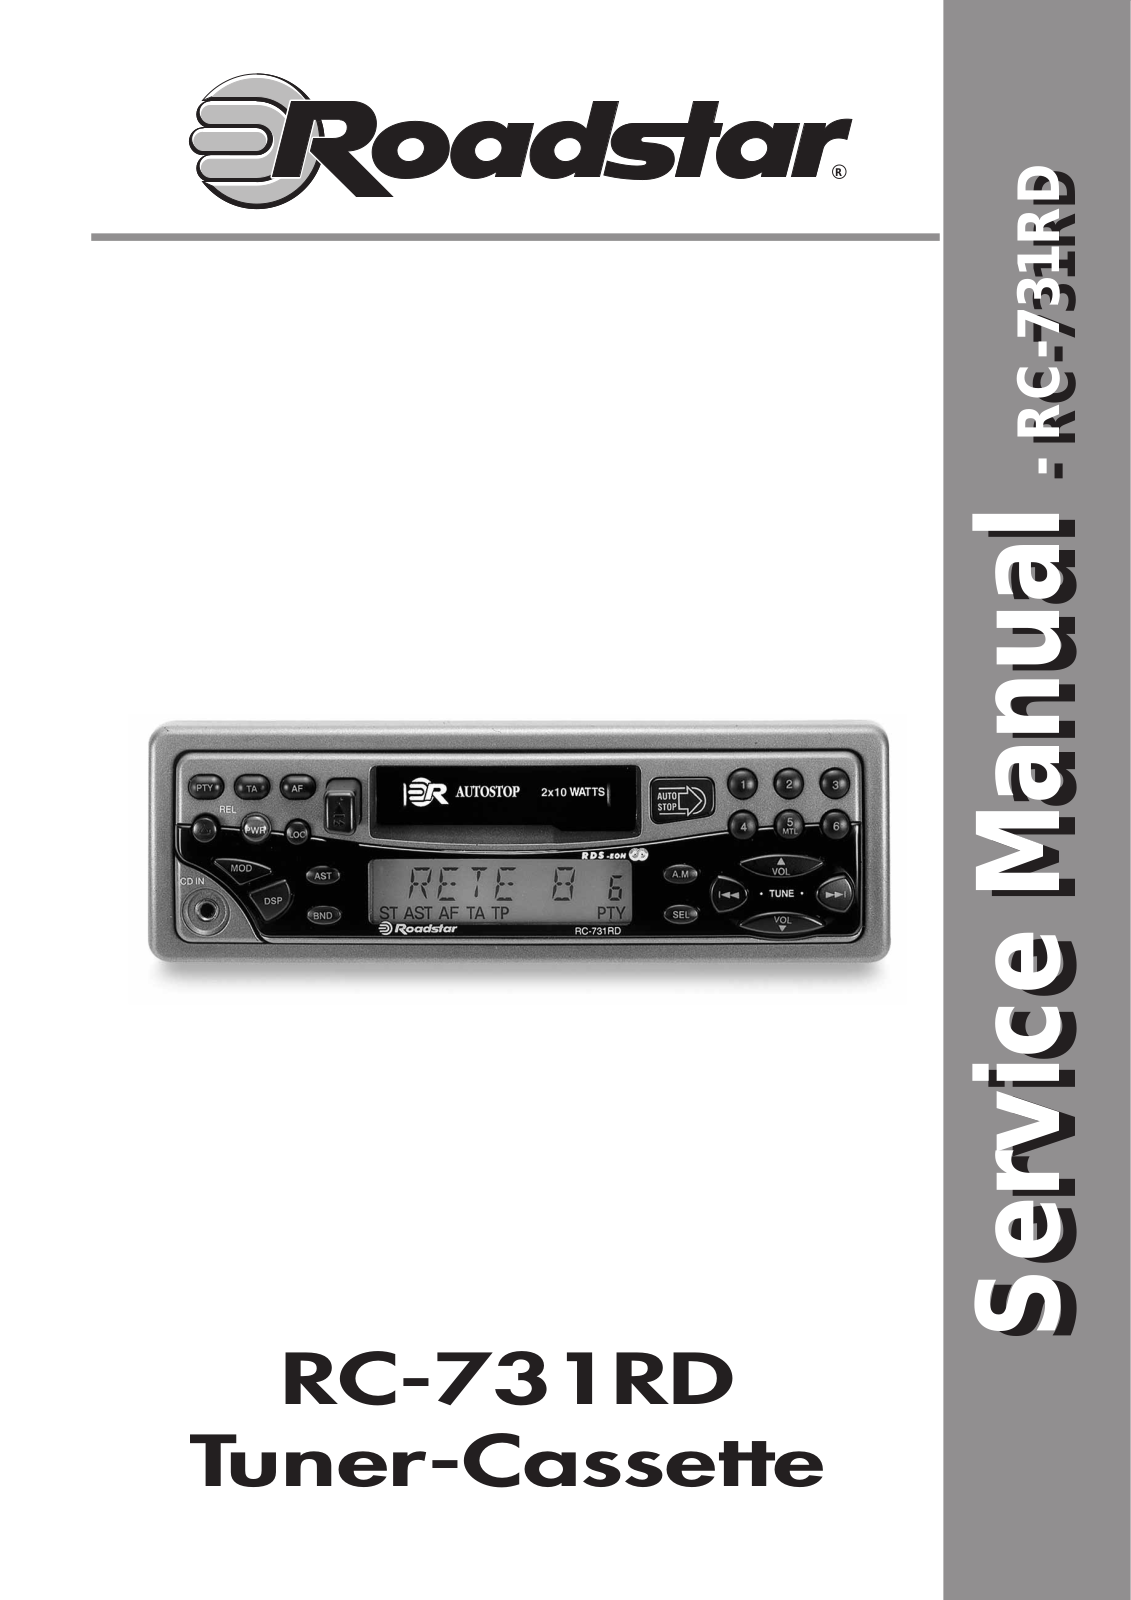 Roadstar RC-731RD Service Manual